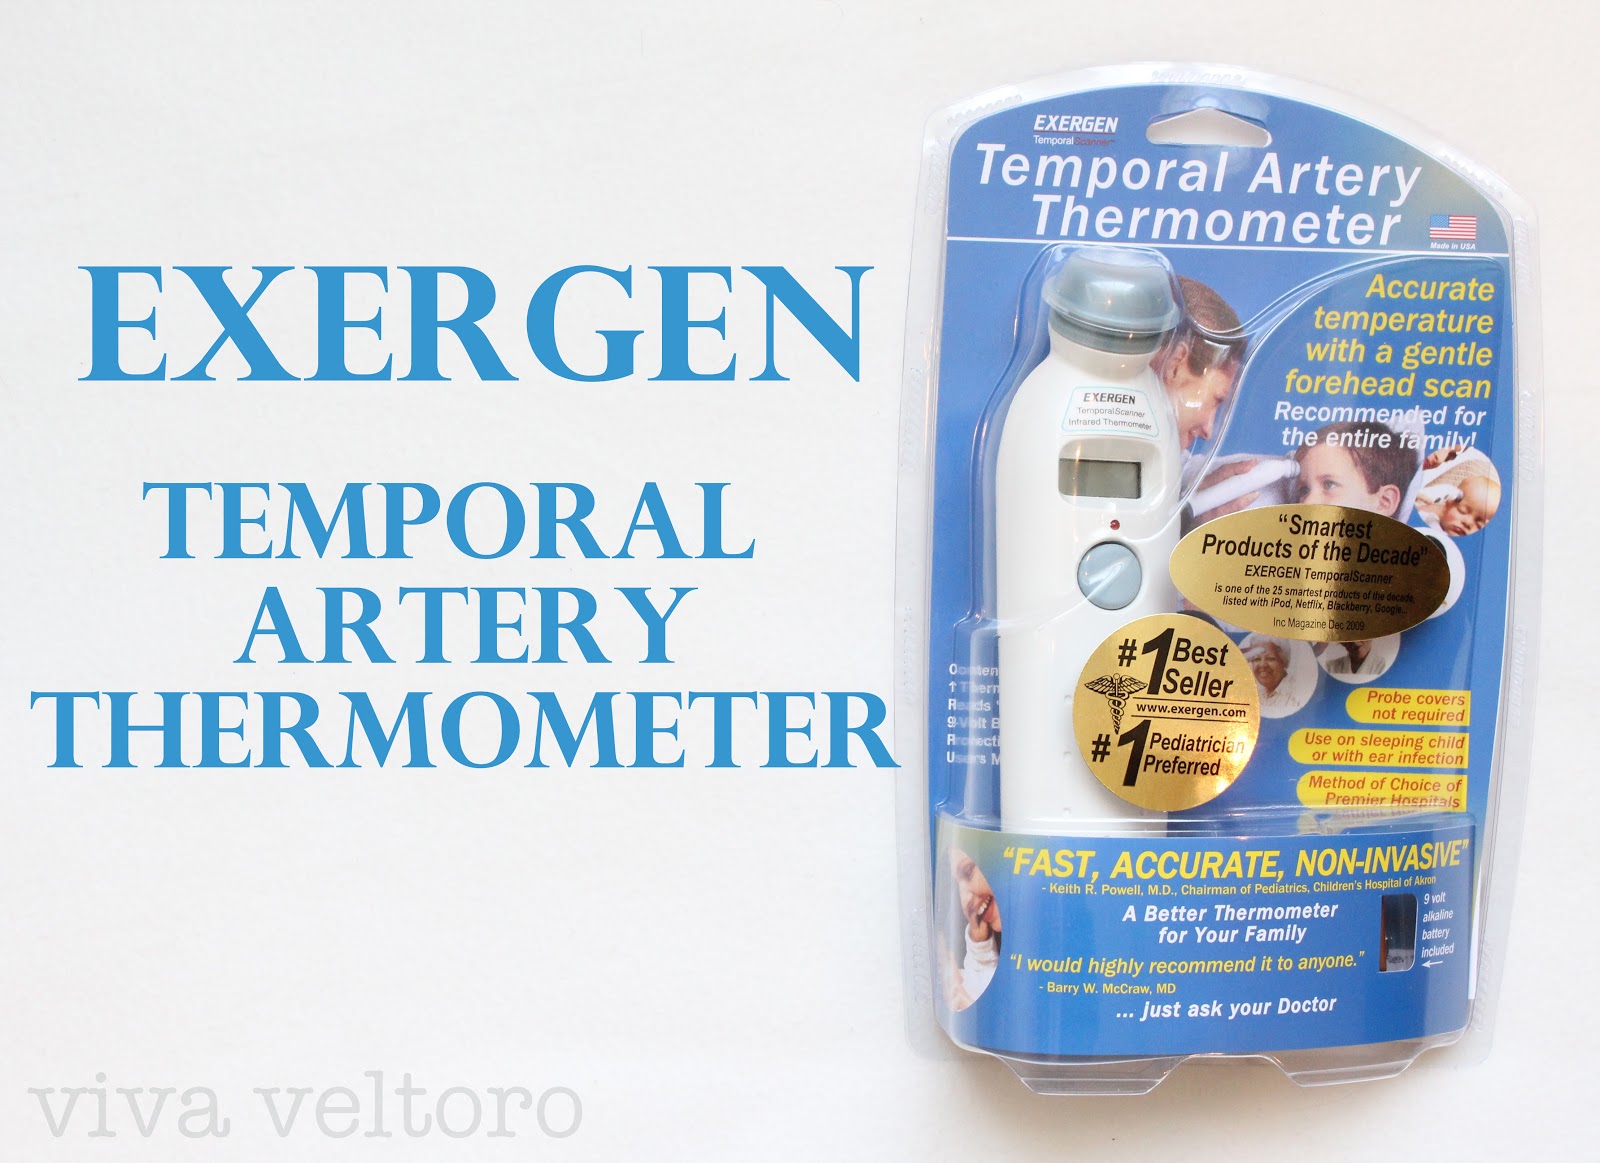 exergen-temporal-artery-thermometer-review-viva-veltoro